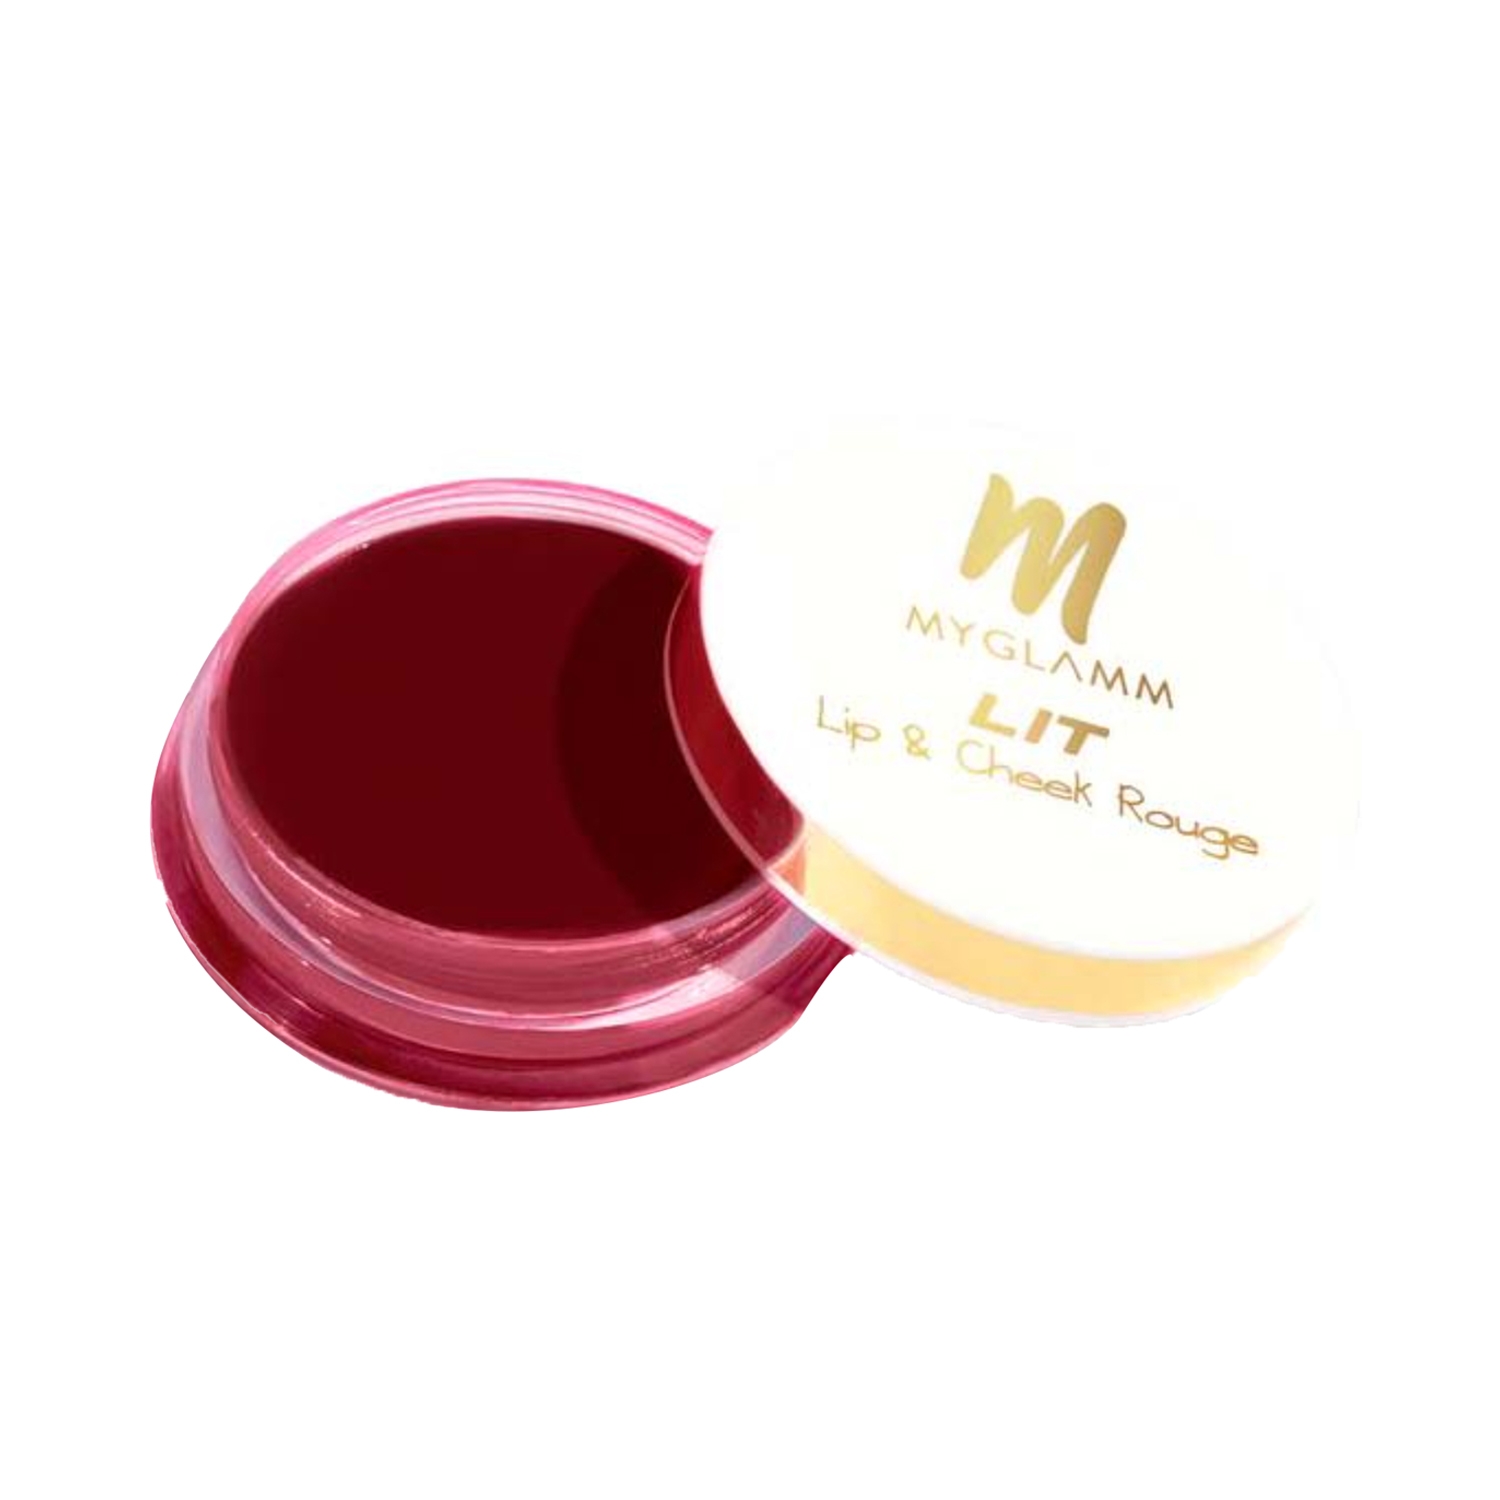 MyGlamm | MyGlamm Lip and Cheek Rouge - Plum Promise (10g)